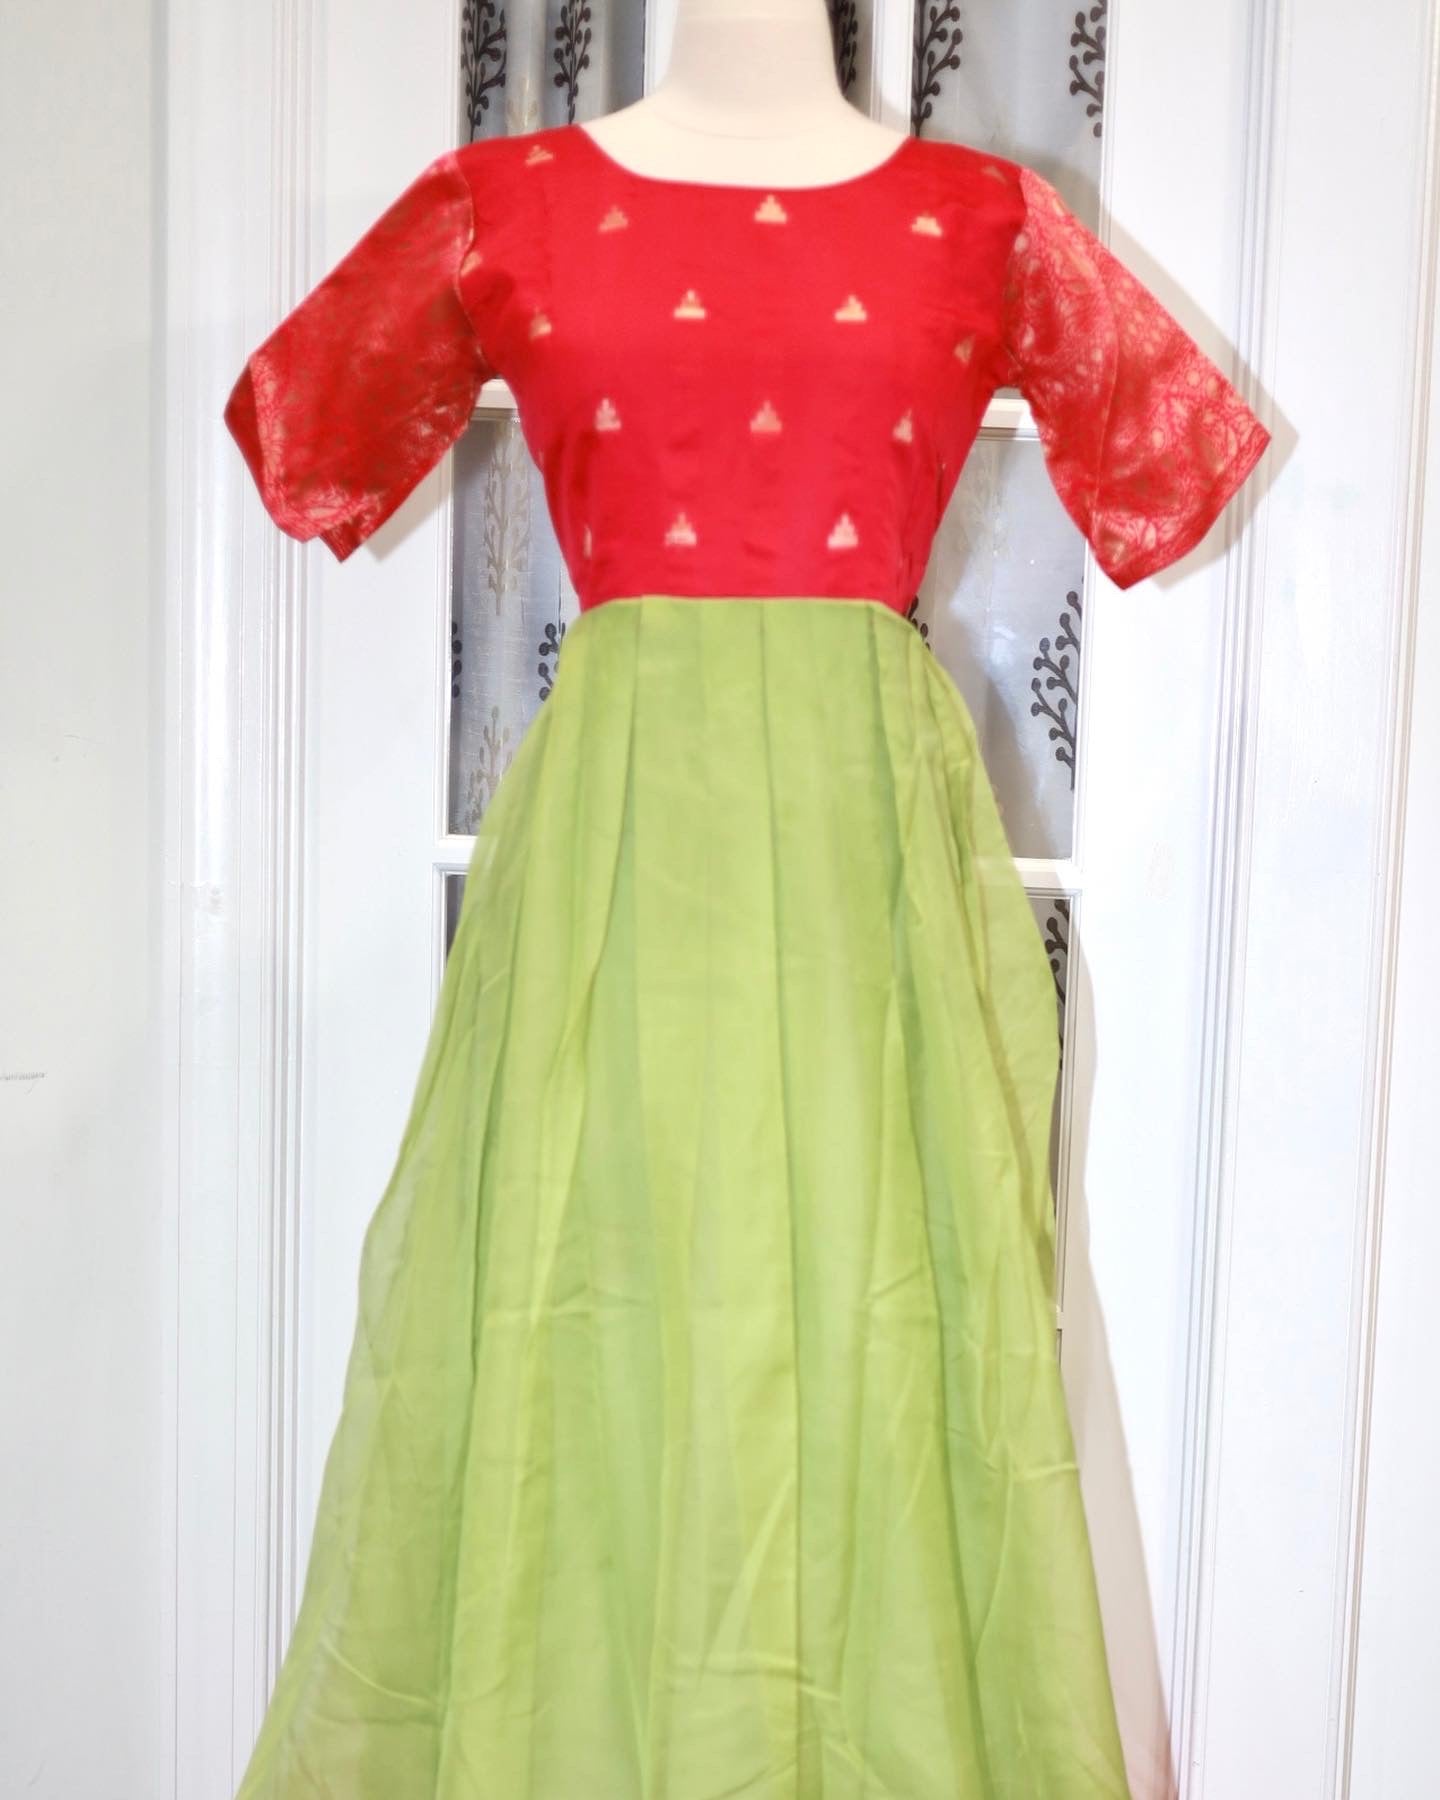 Festive Spl Traditional Long Gown Dress in Liquid Organza fabric. Very light Weight Dress.